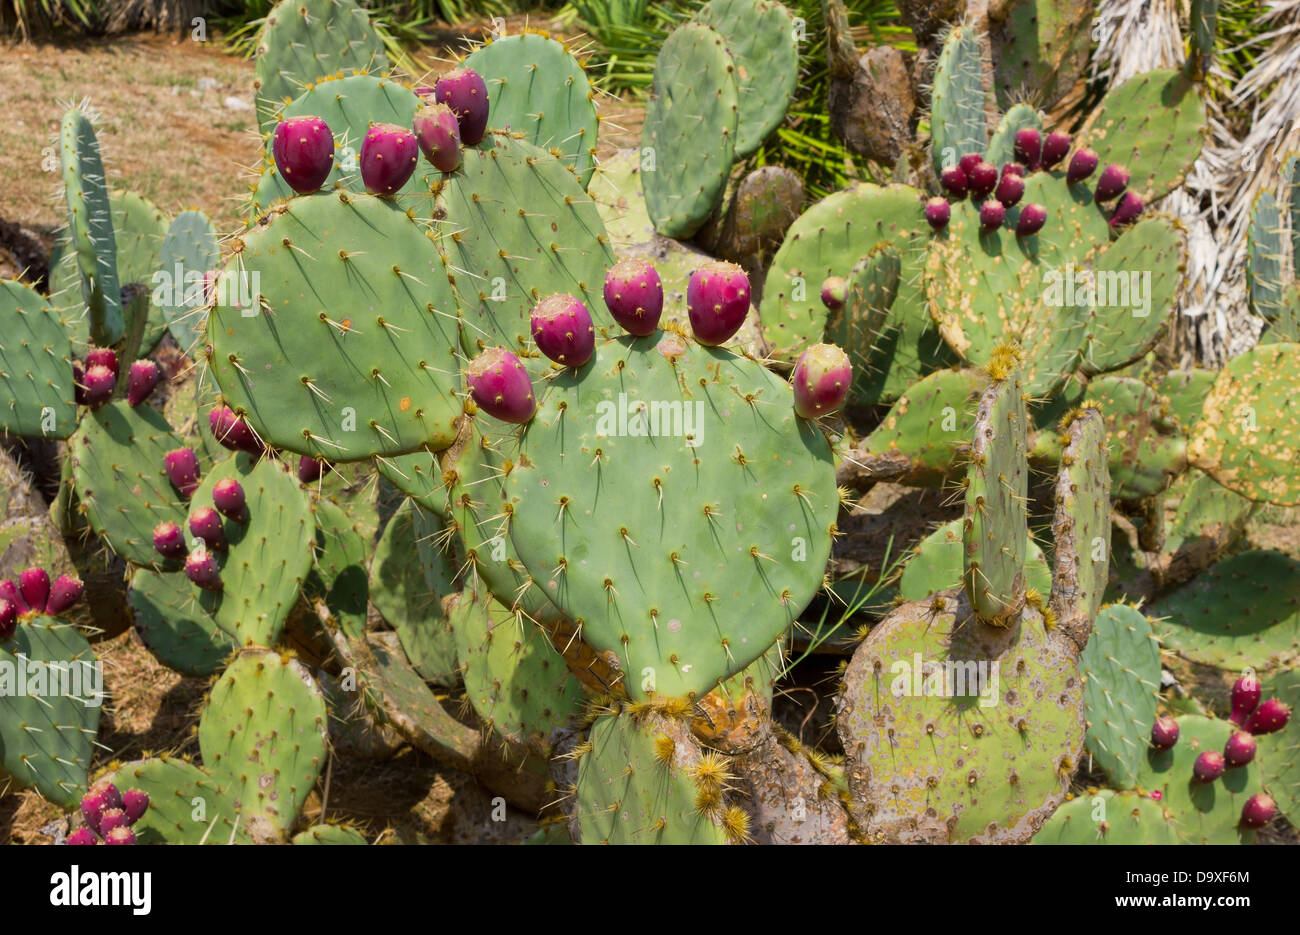 Fico d'india vivid cactus Cactaceae Opuntia con fresca frutta viola sulla isola di Lokrum. Foto Stock